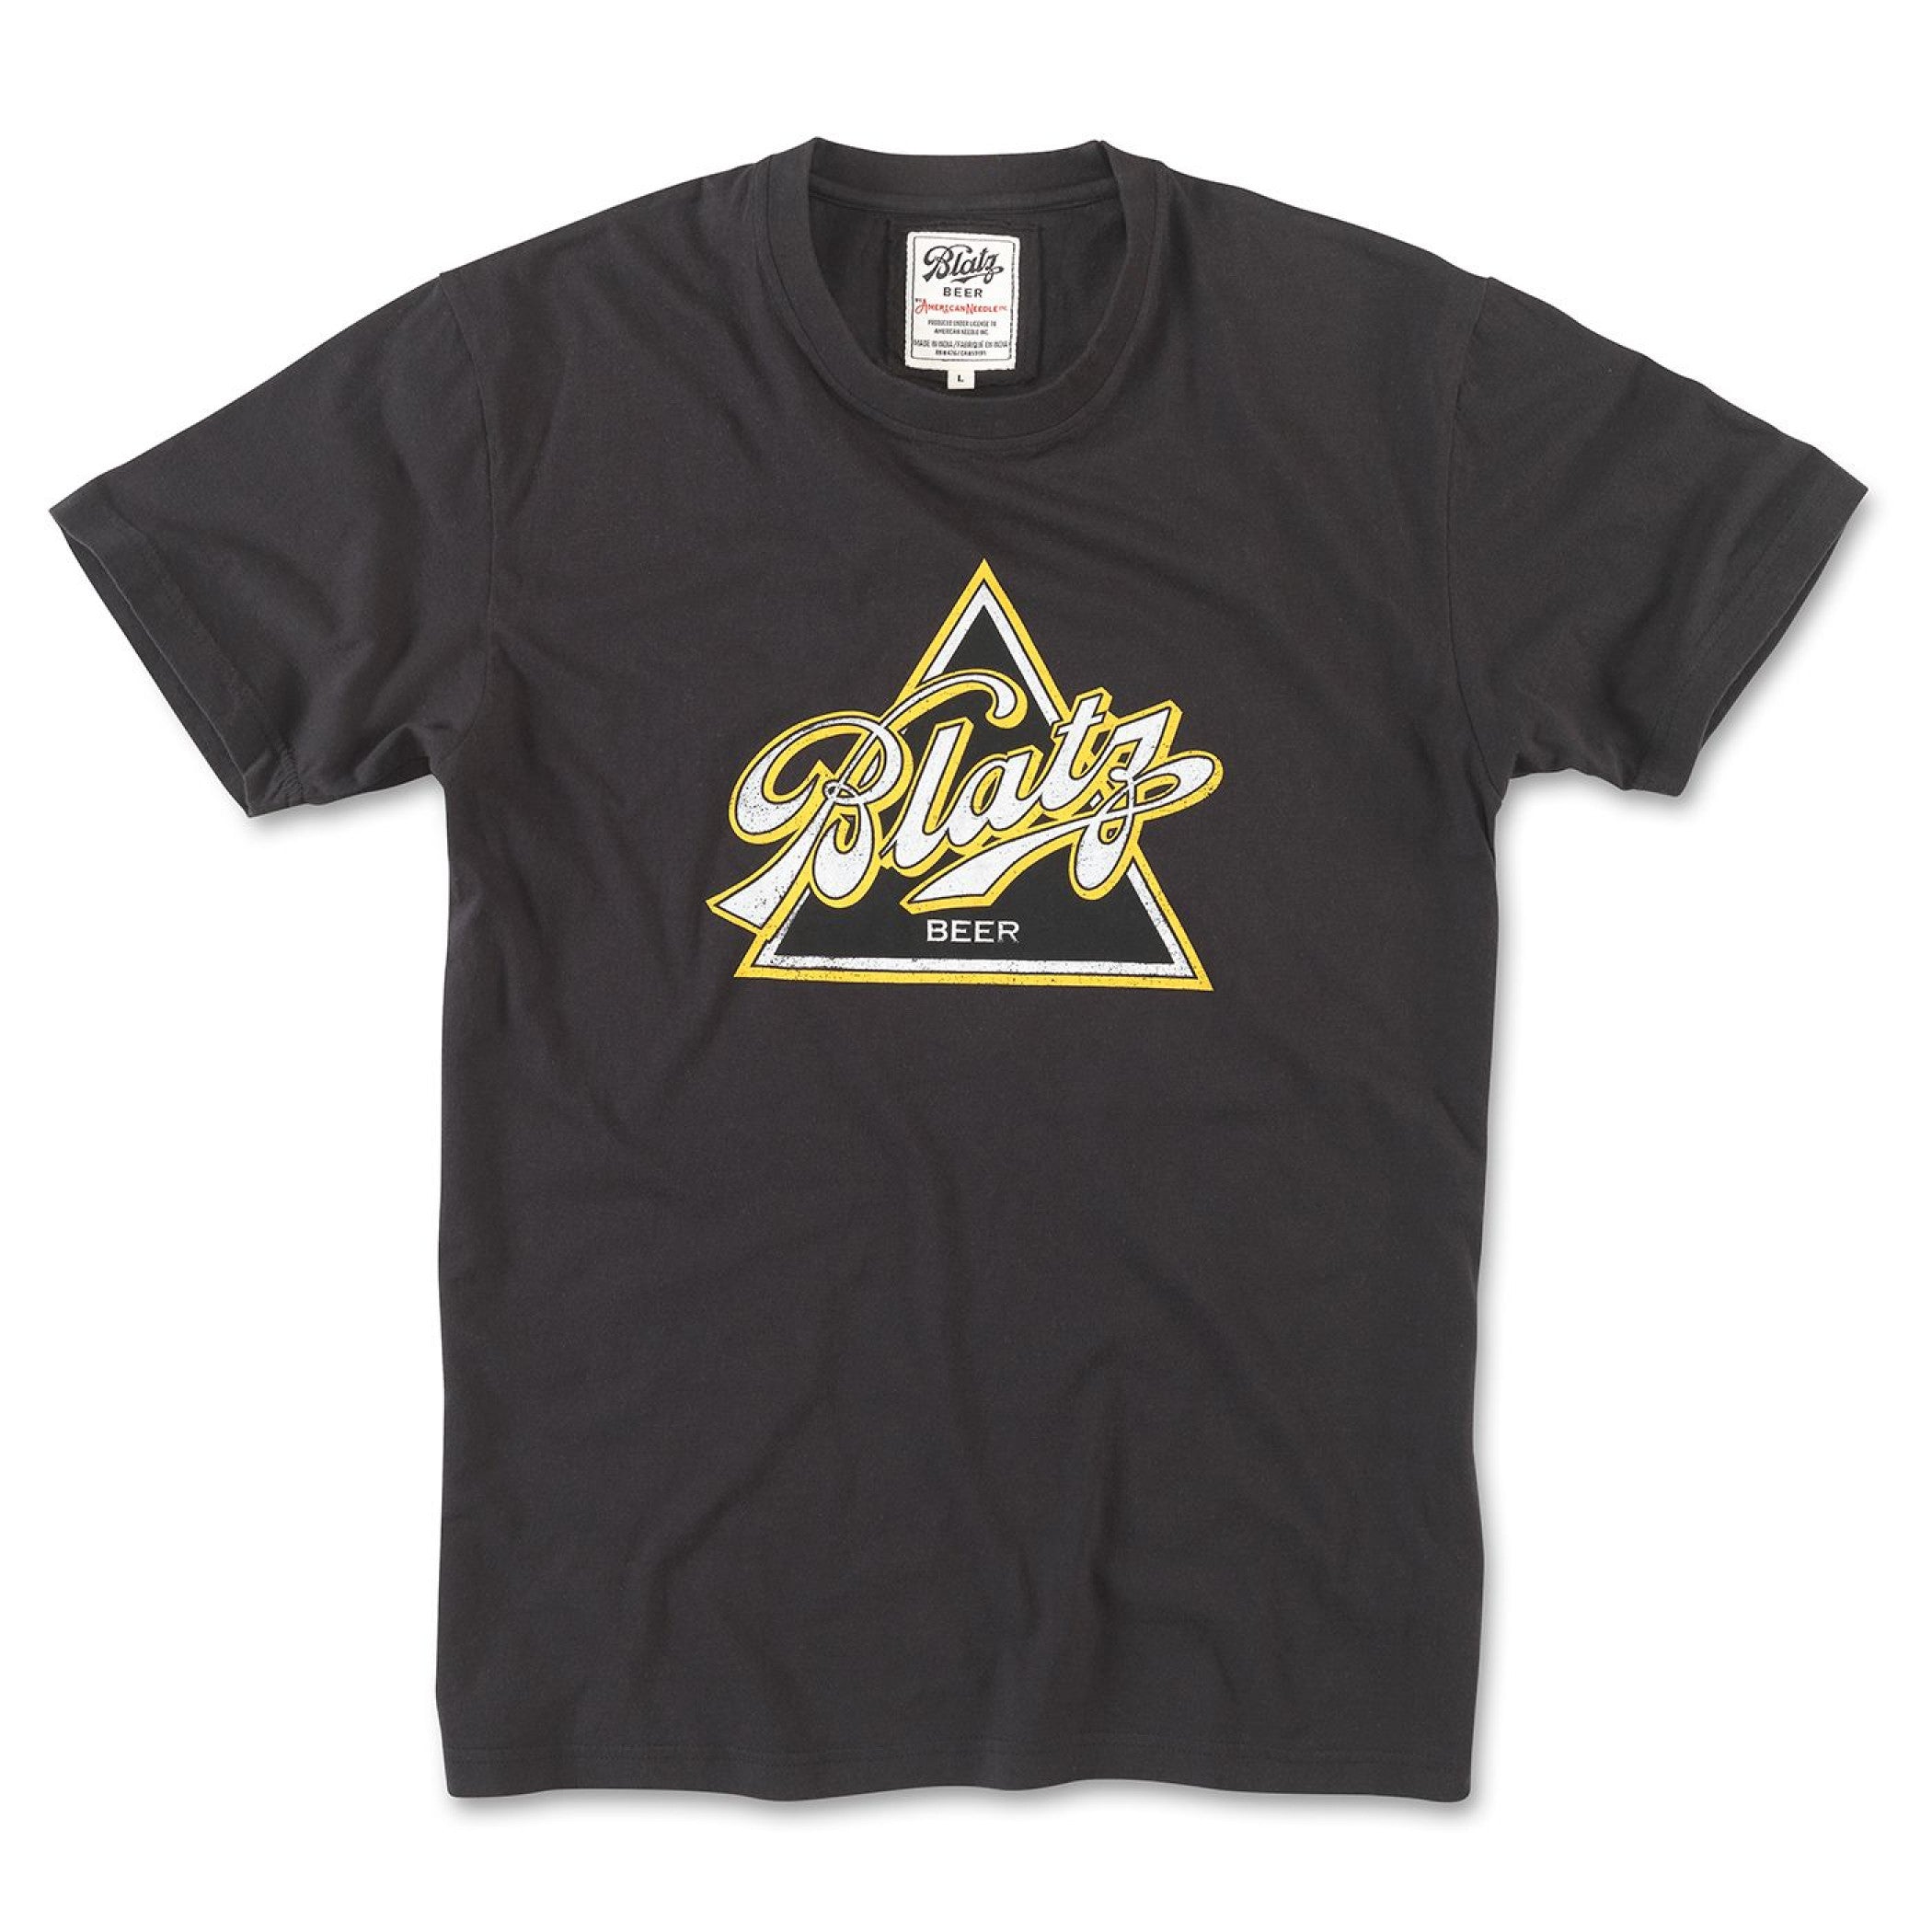 title:Blatz Beer Retro Style Logo Brass Tacks T-Shirt;color:Black